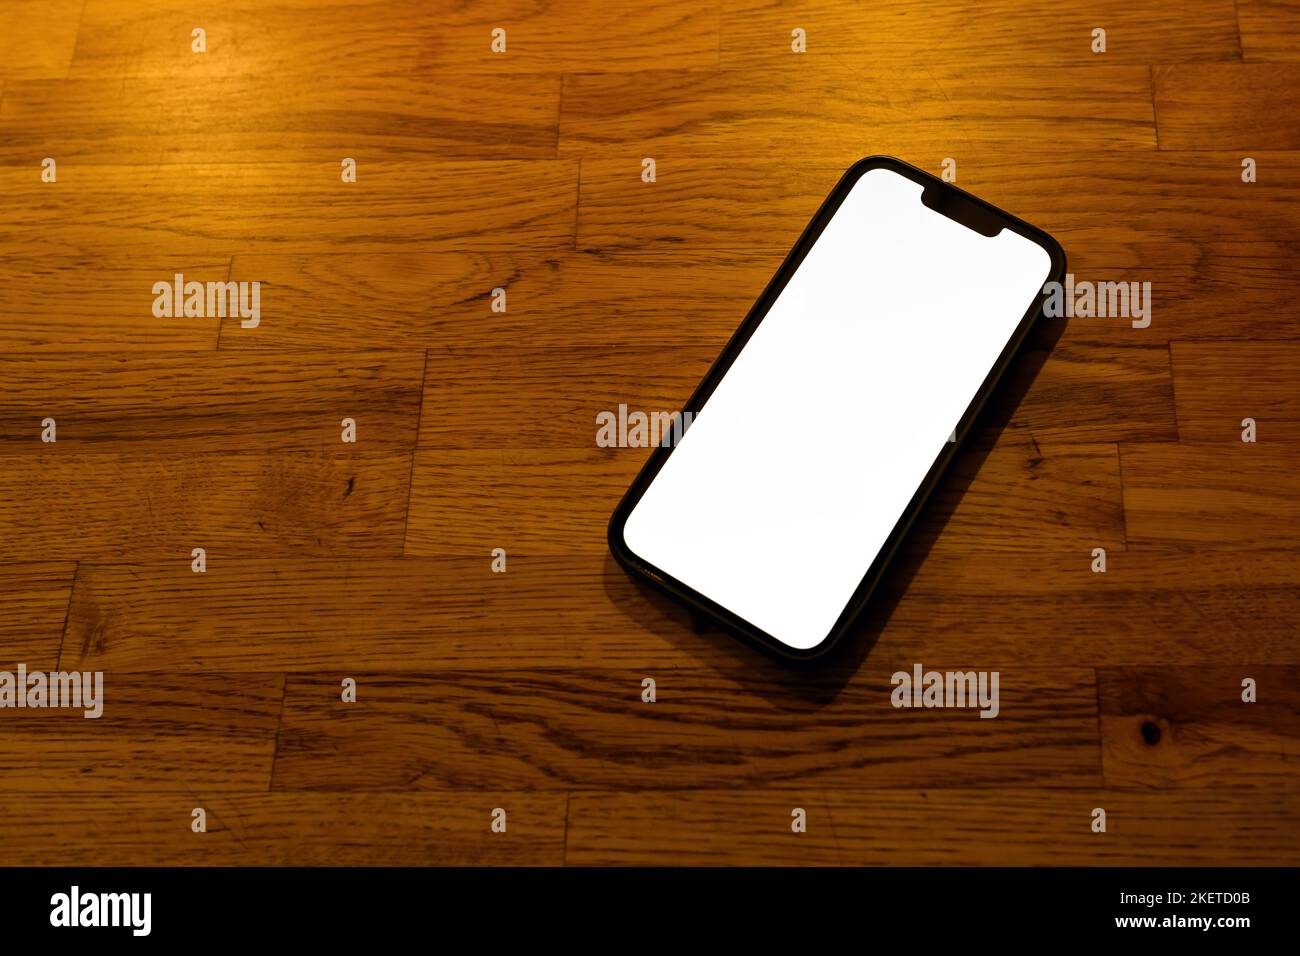 Handy leer weißen Bildschirm mockup. Smartphone auf Hartholz-Parkettboden. Selektiver Fokus. Stockfoto